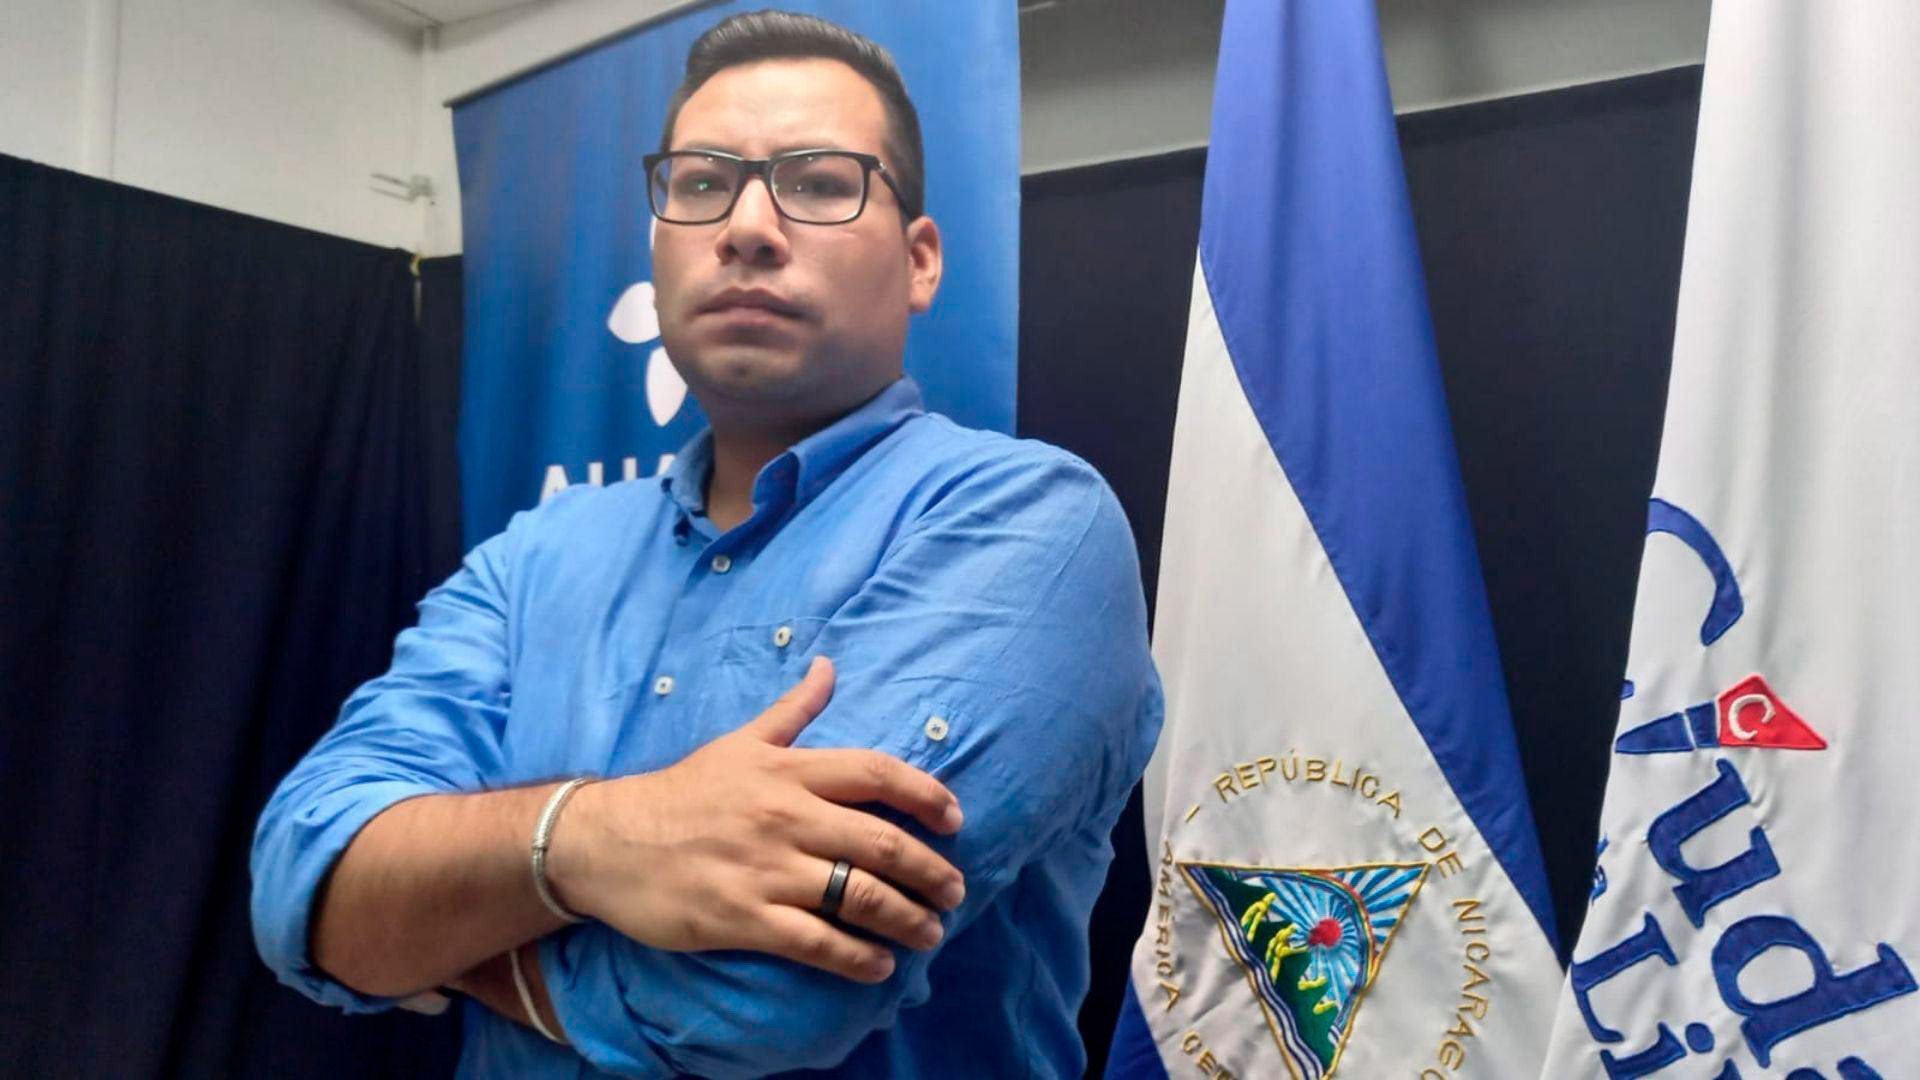 El régimen de Daniel Ortega volvió a detener arbitrariamente al líder opositor Yubrank Suazo